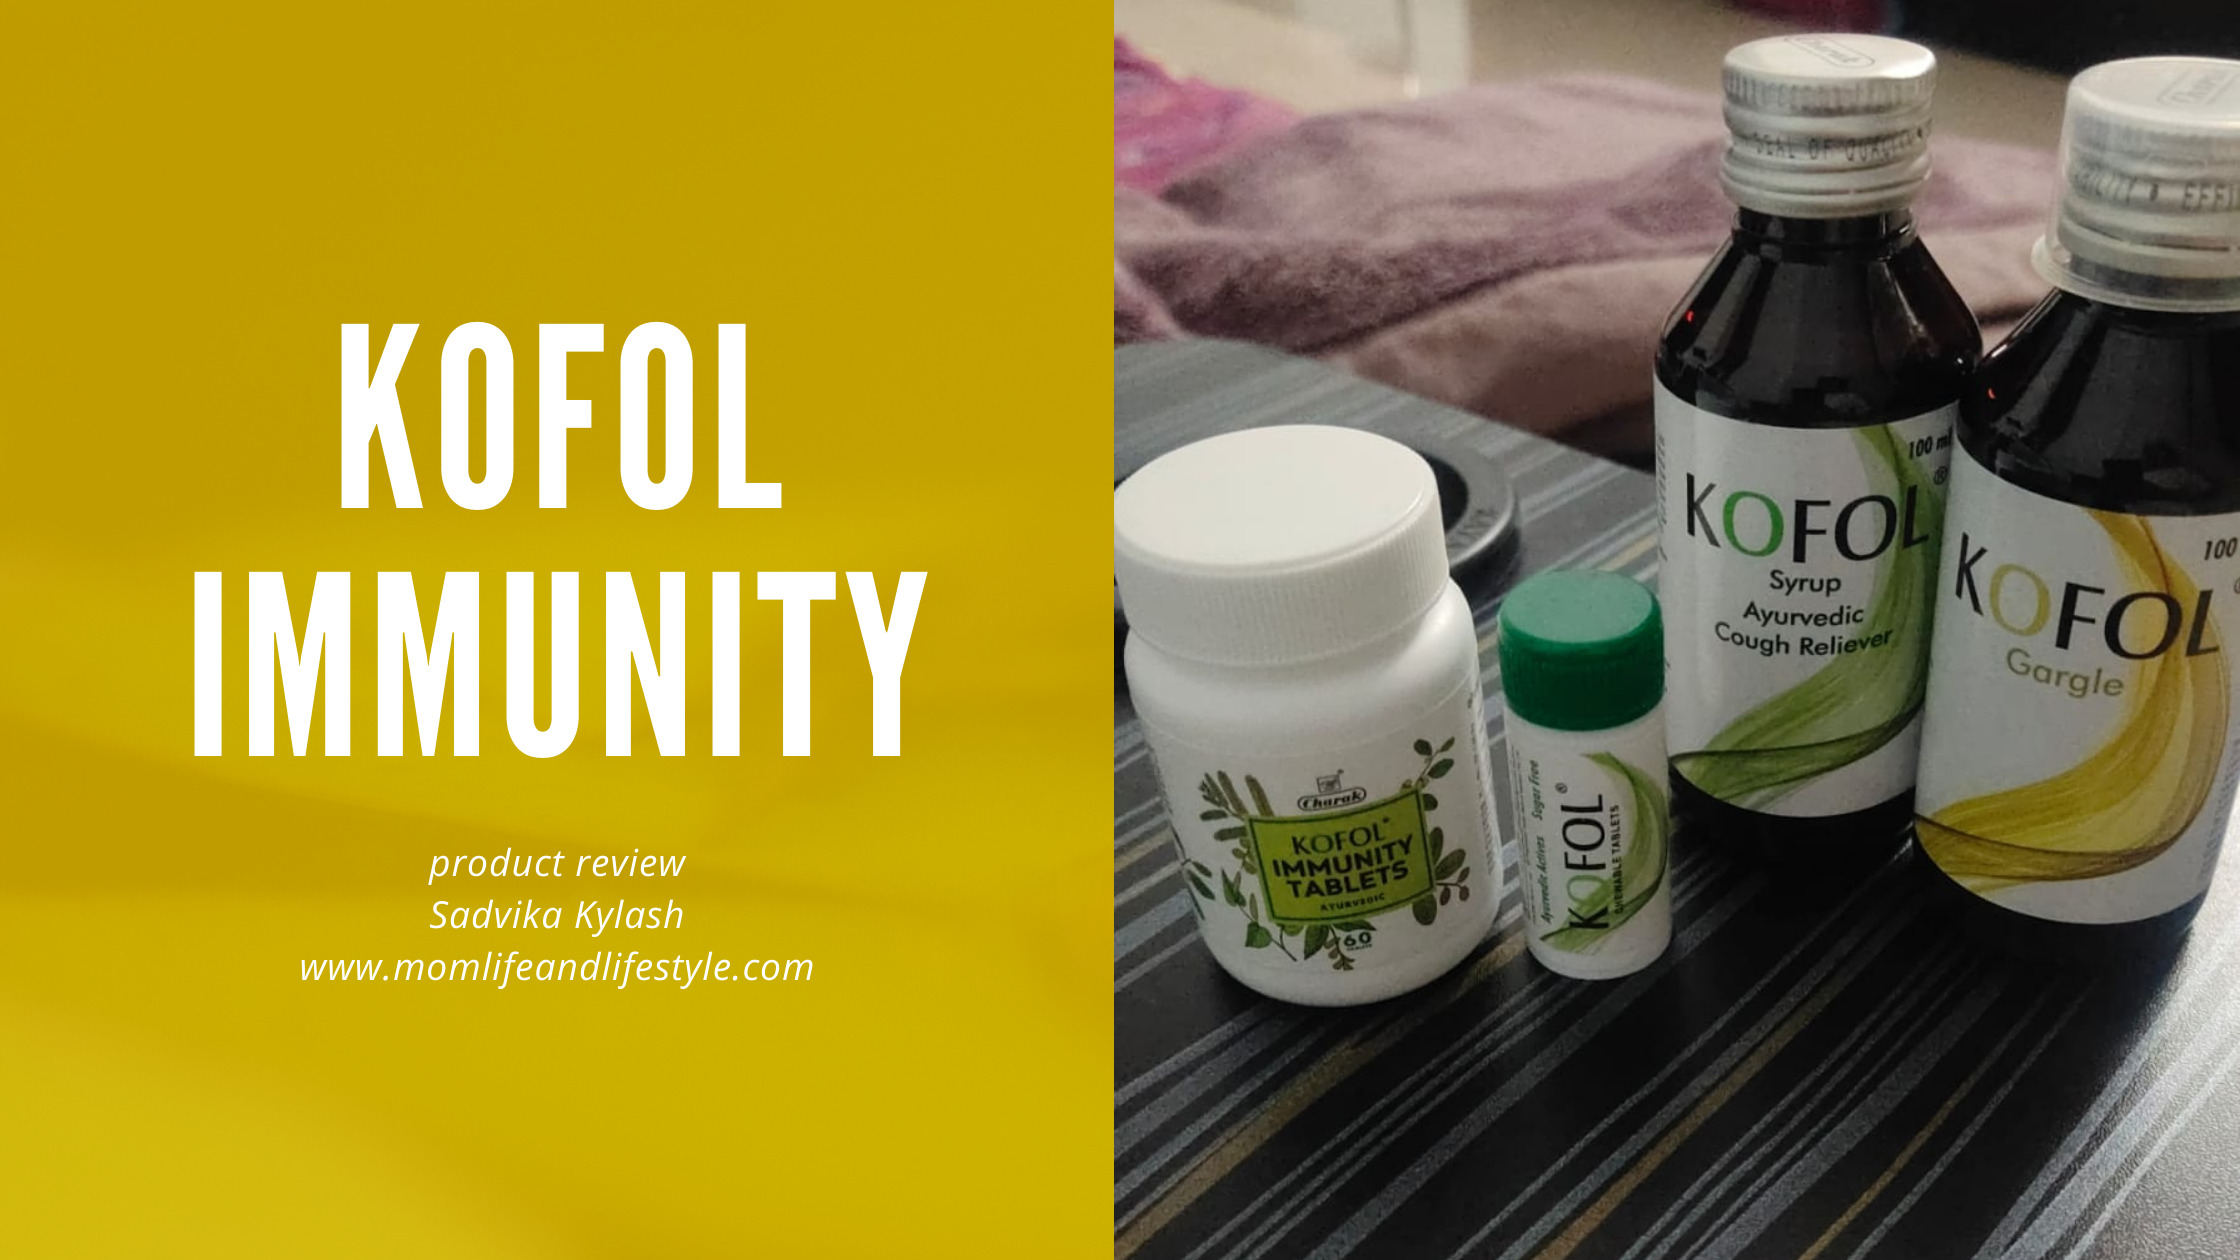 KOFOL immunity supplements